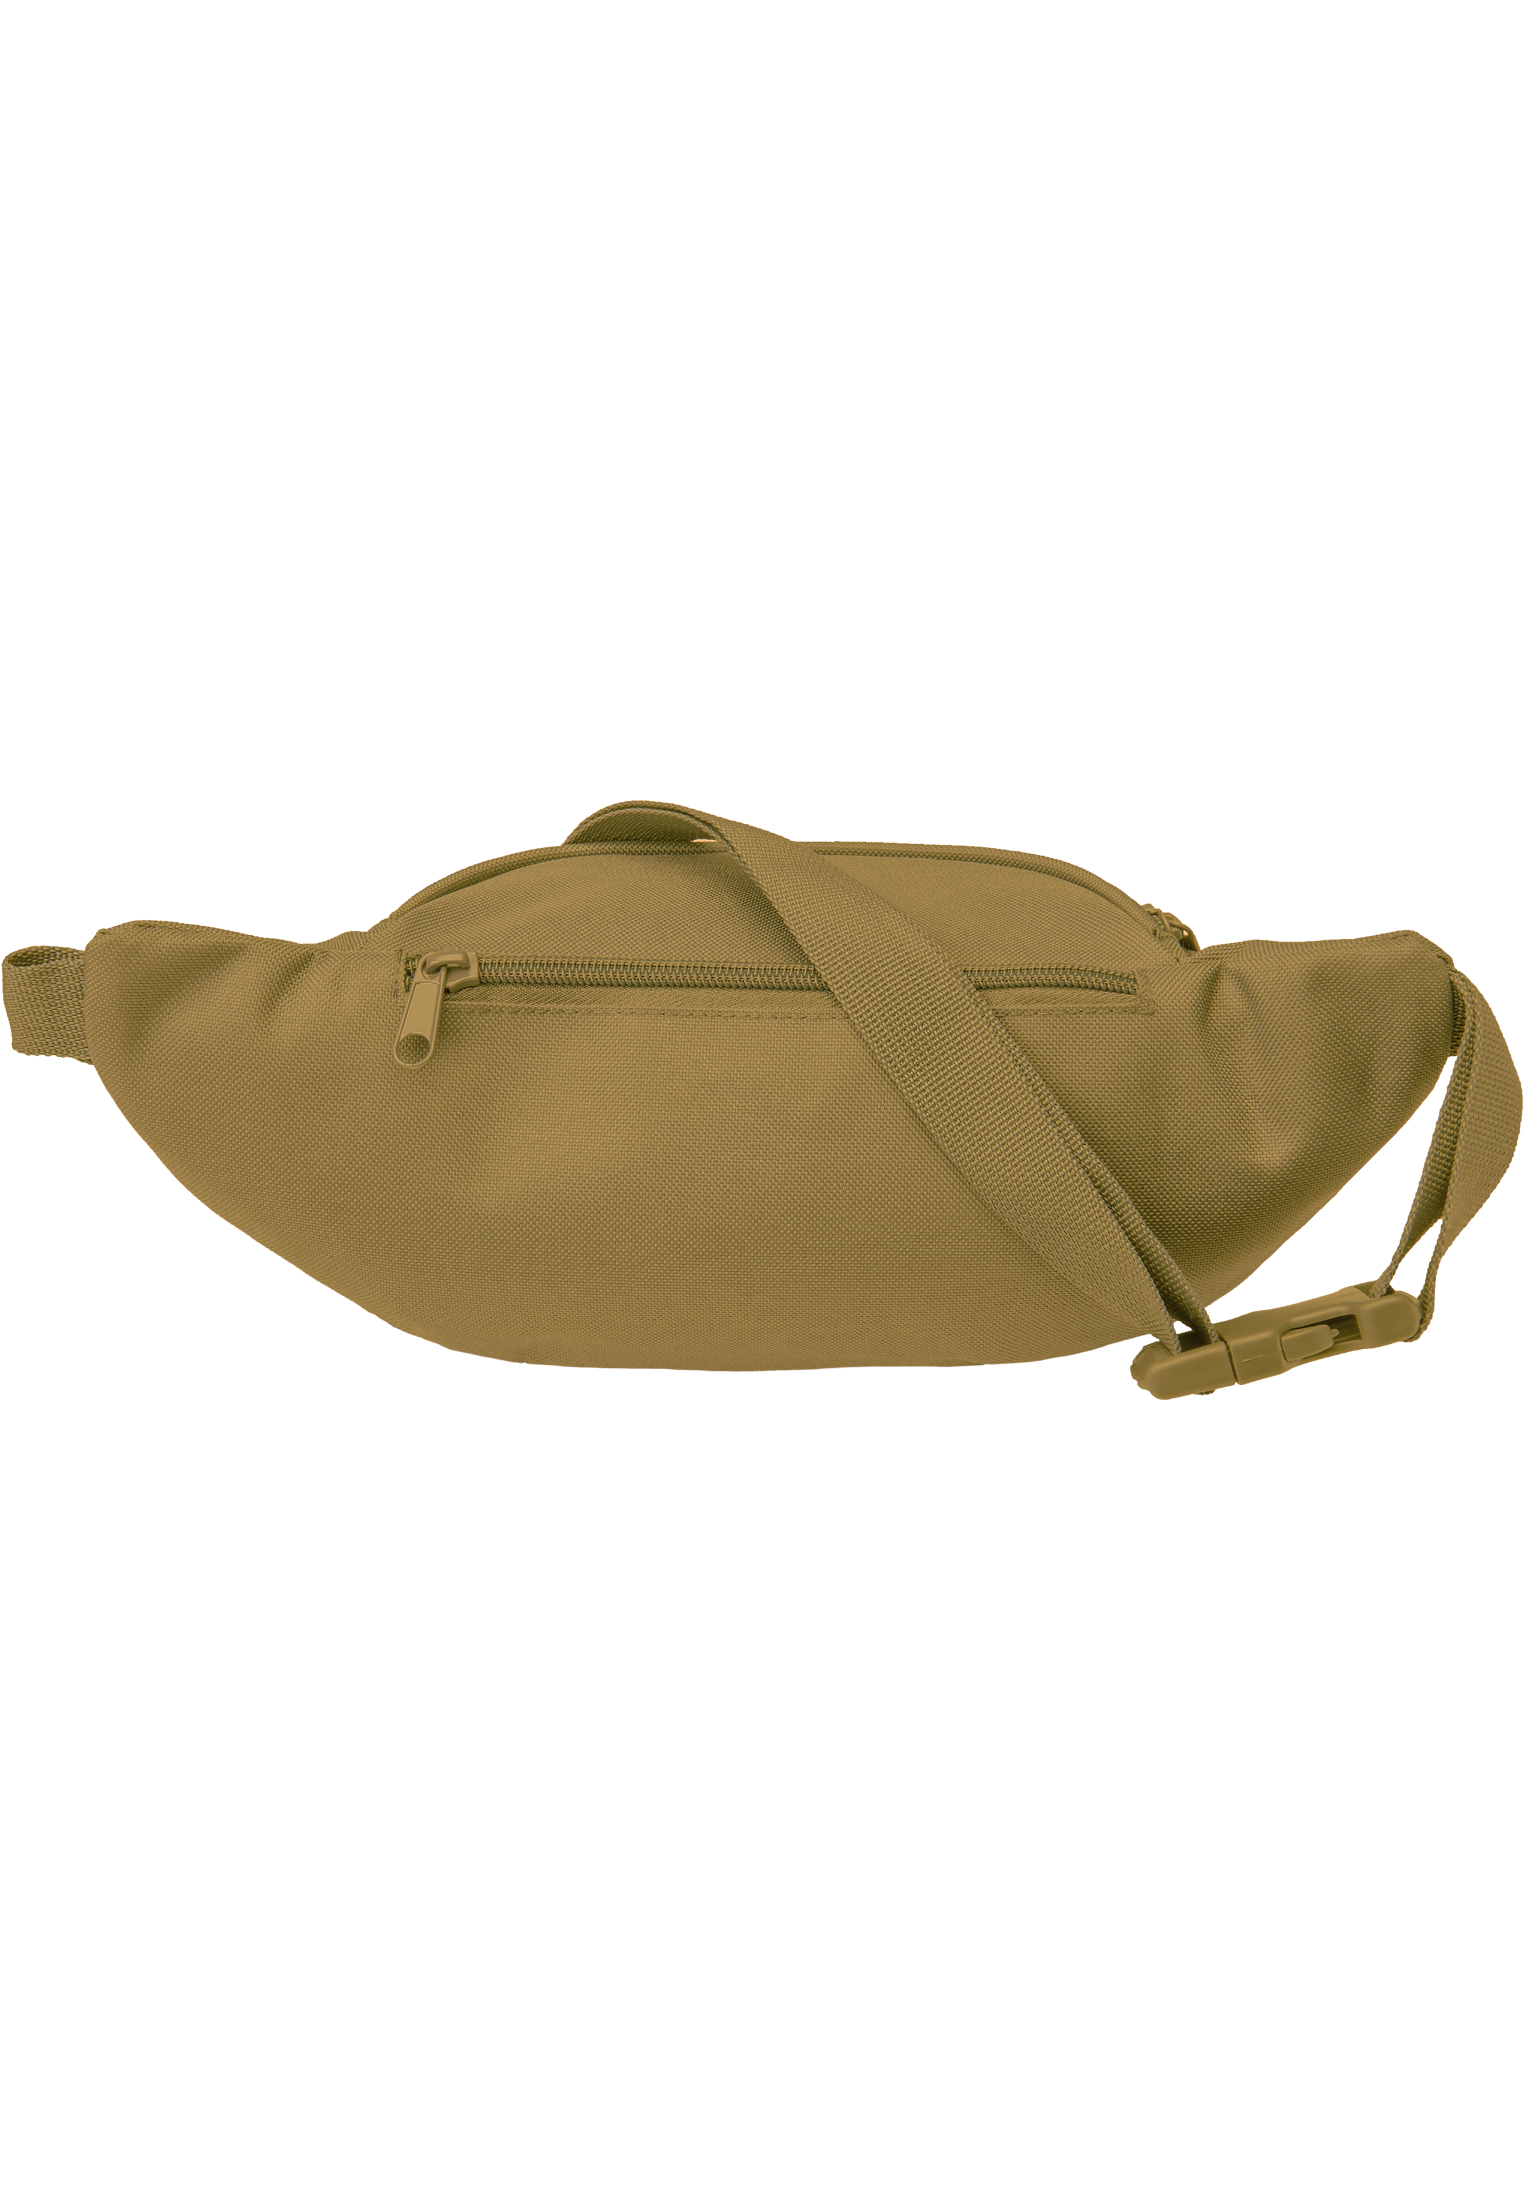 Taschen Pocket Hip Bag in Farbe camel